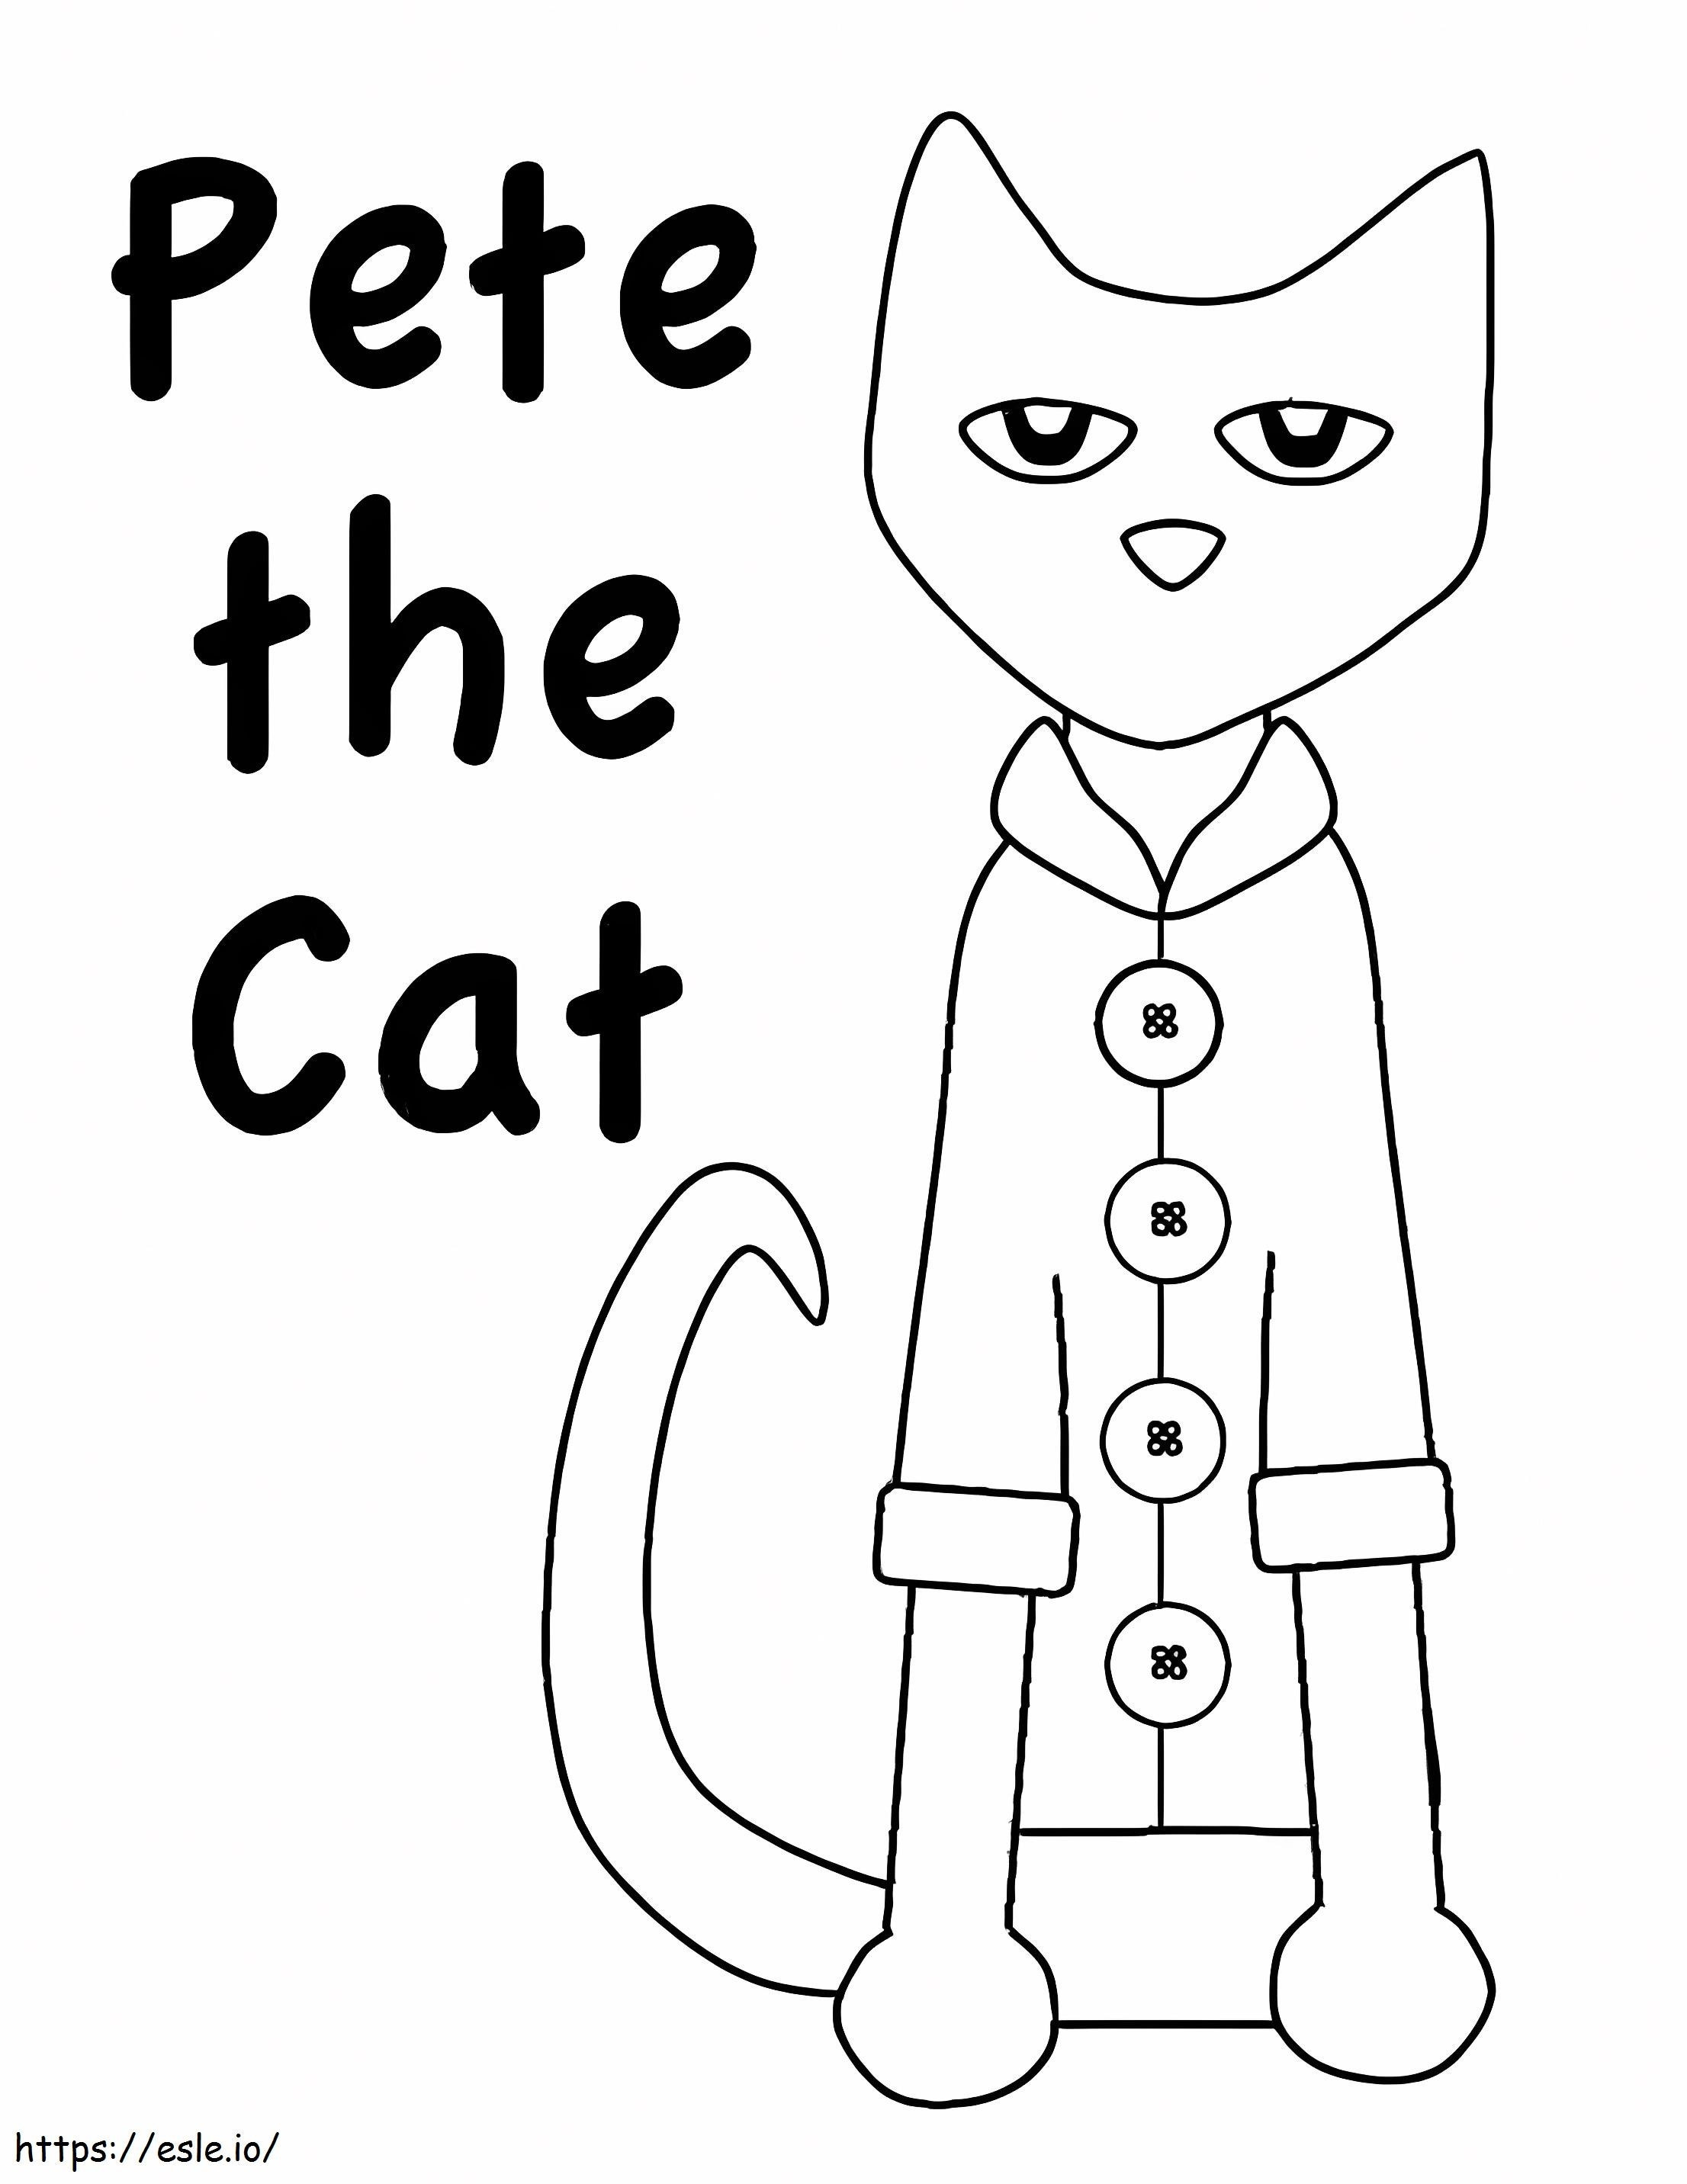 Pete Siedzący kot kolorowanka